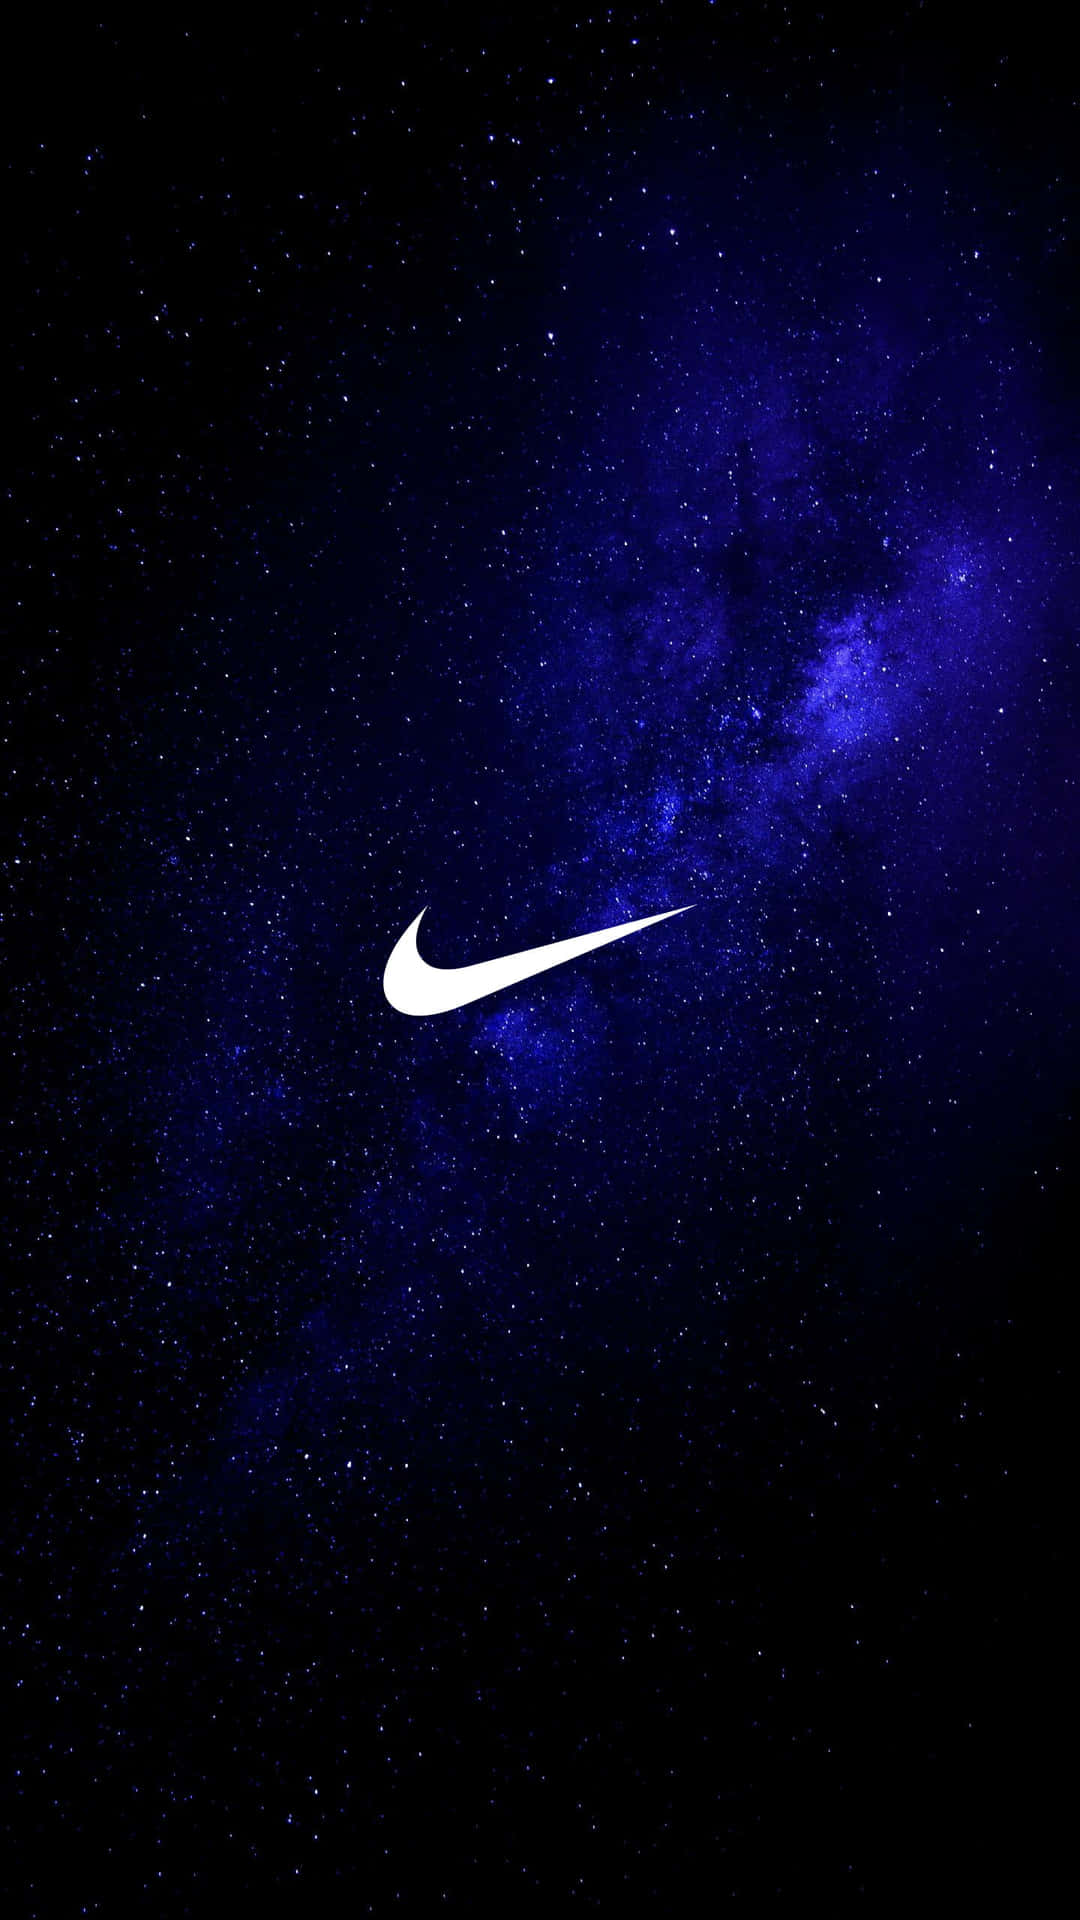 Download Swoosh Nike Galaxy Blue Nebula